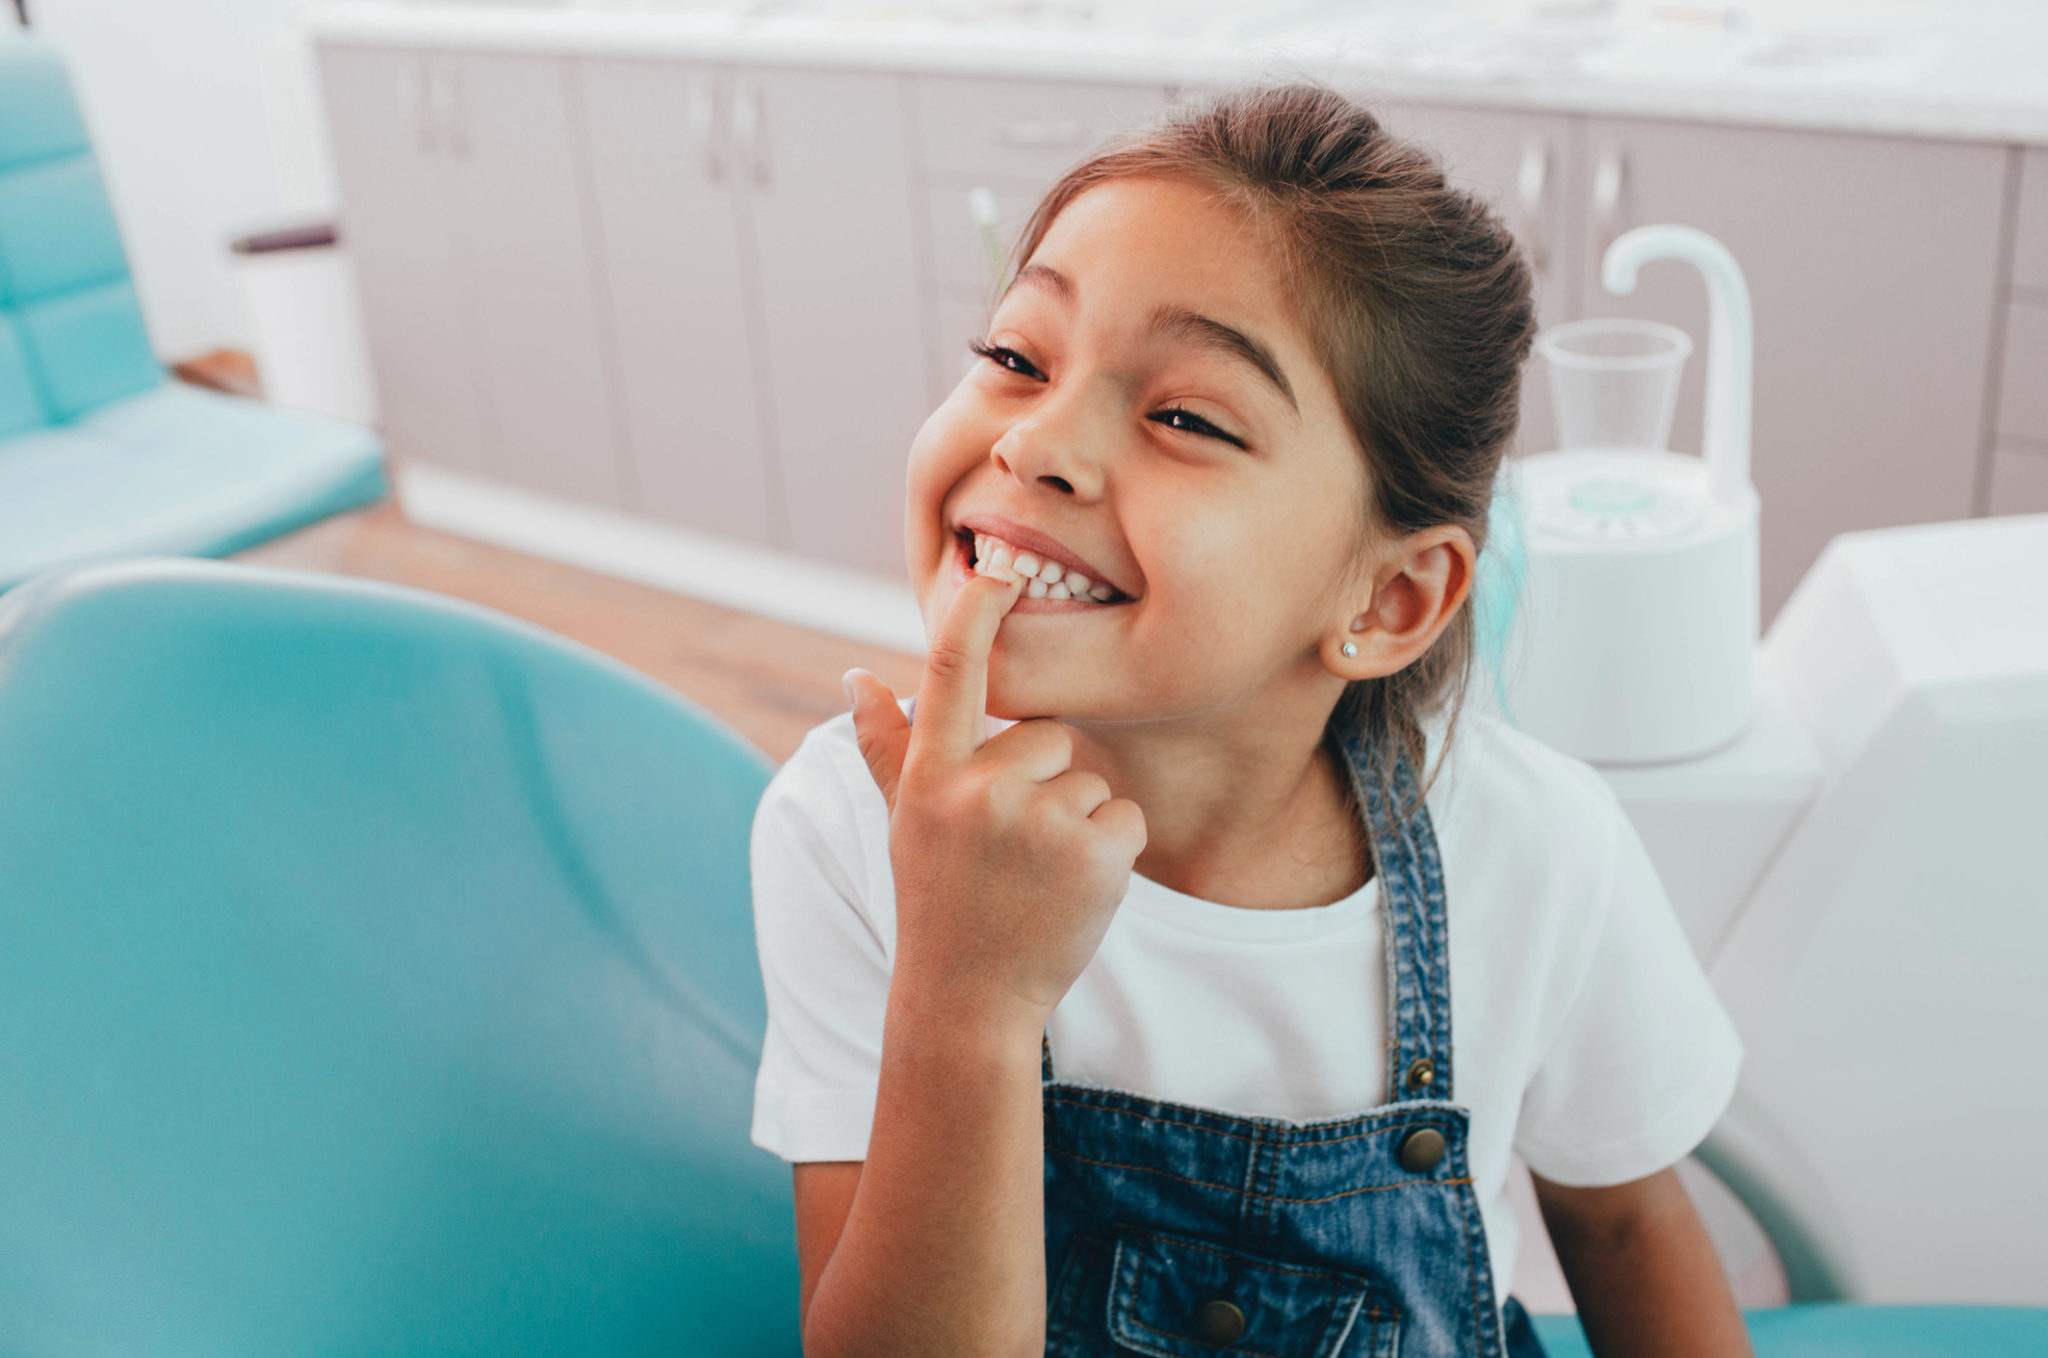 Flouride little girl oral health dental chair